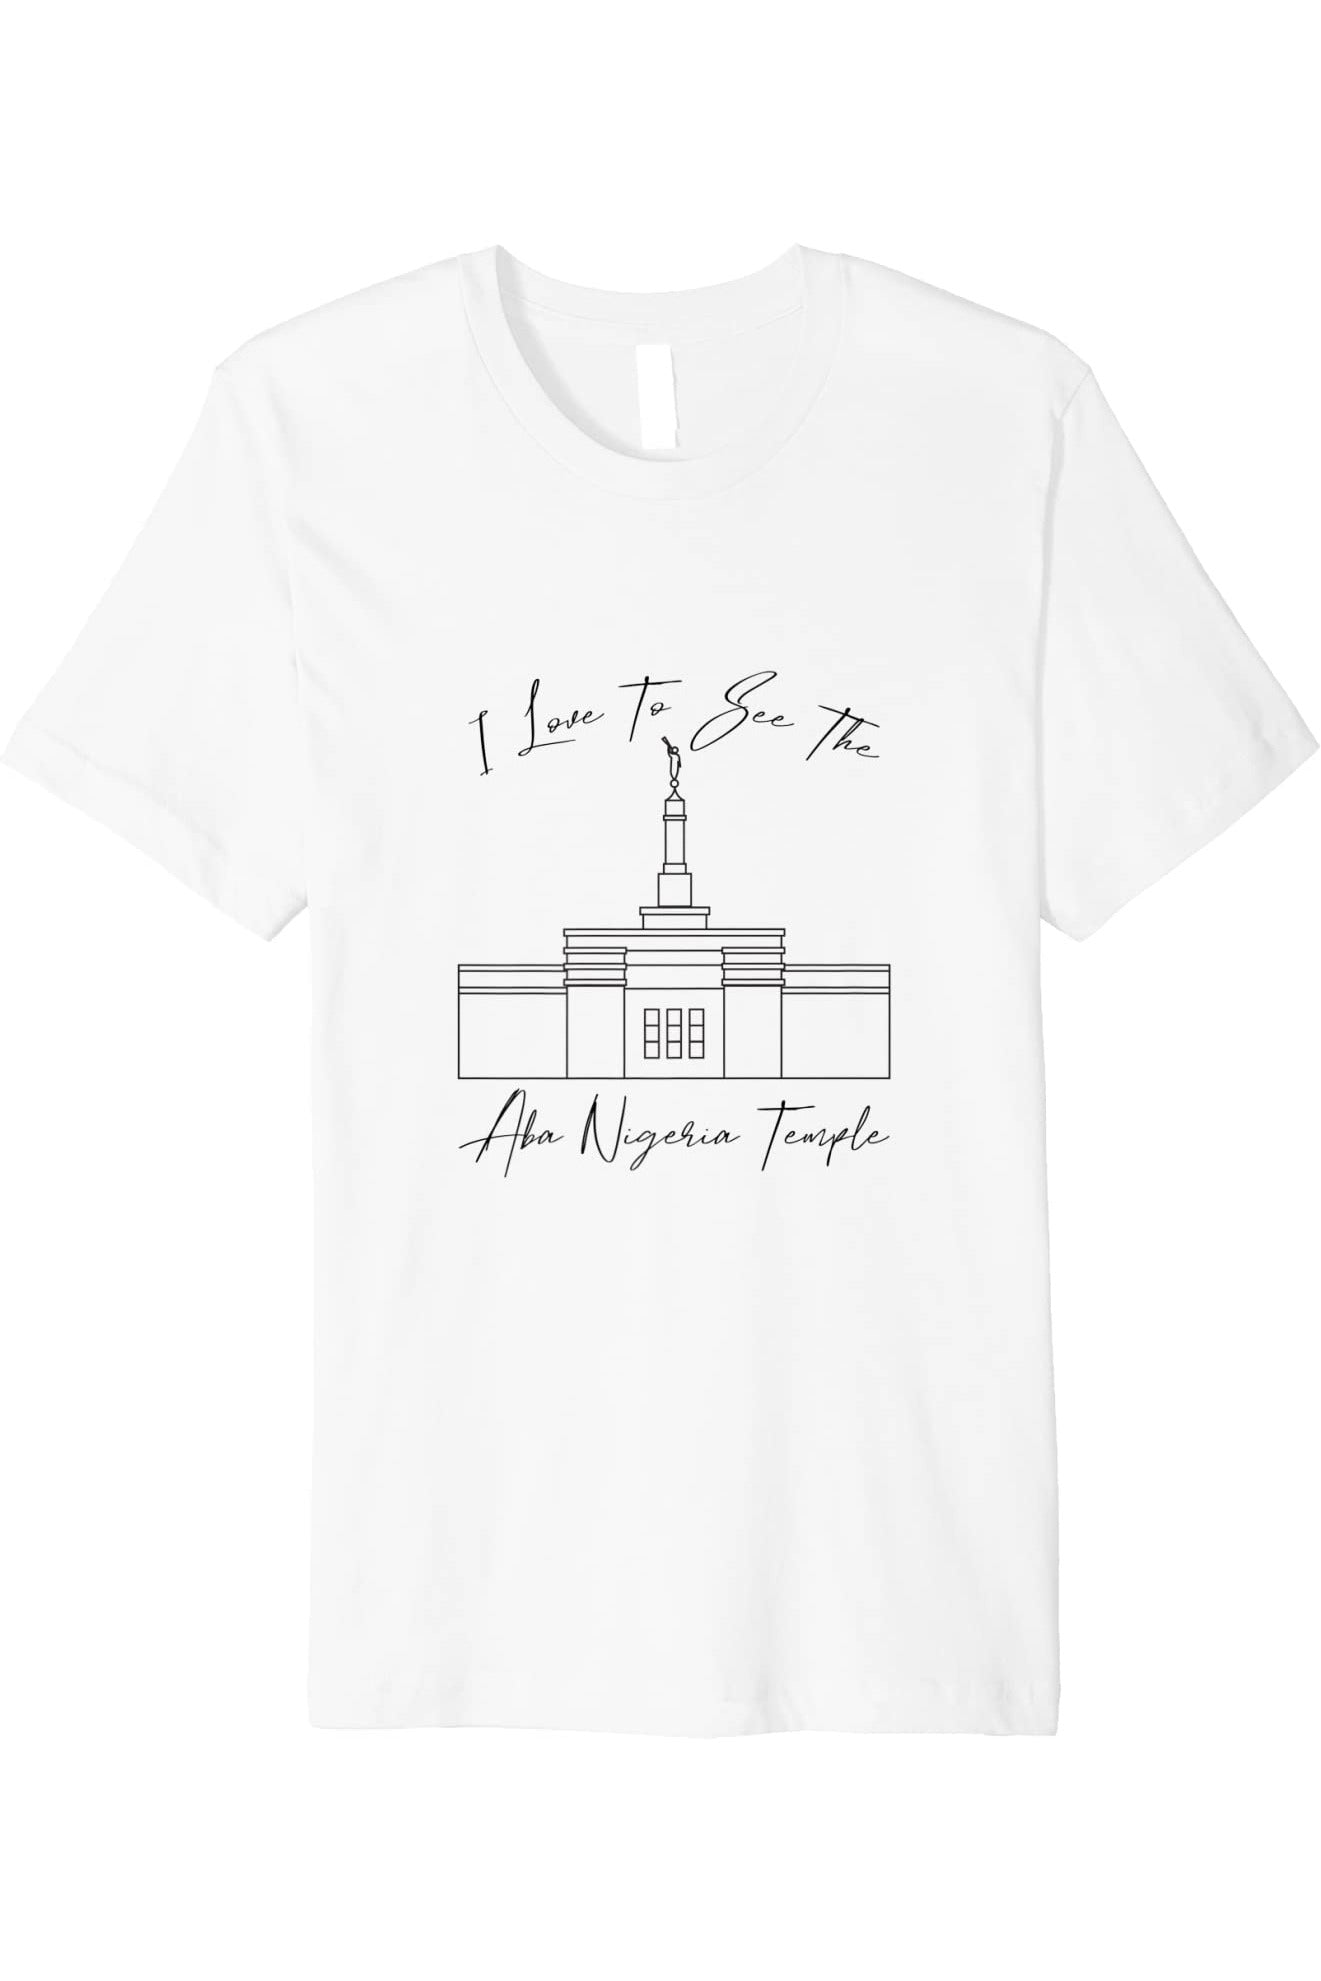 Aba Nigeria Temple T-Shirt - Premium - Calligraphy Style (English) US